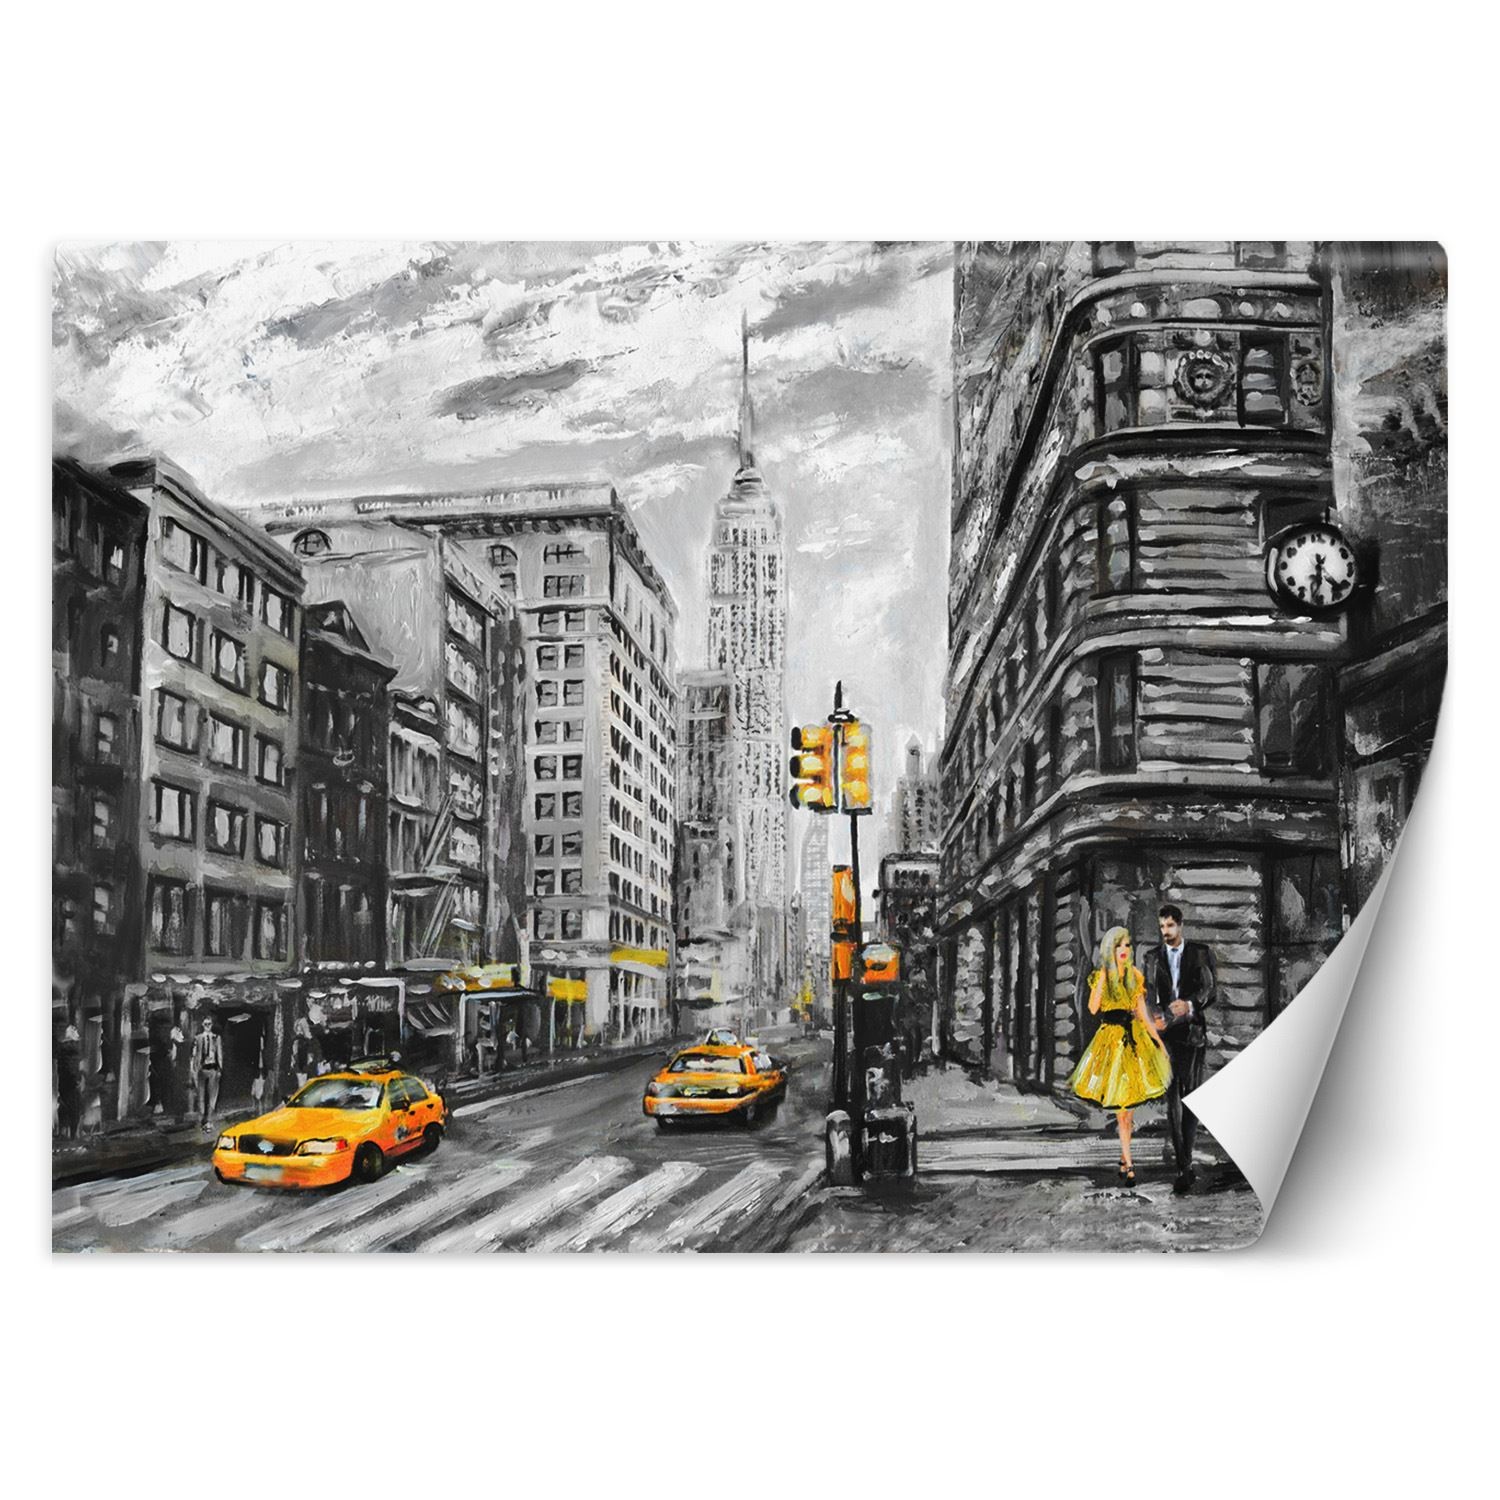 Trend24 – Behang – New York Taxi – Vliesbehang – Fotobehang – Behang Woonkamer – 350x245x2 cm – Incl. behanglijm